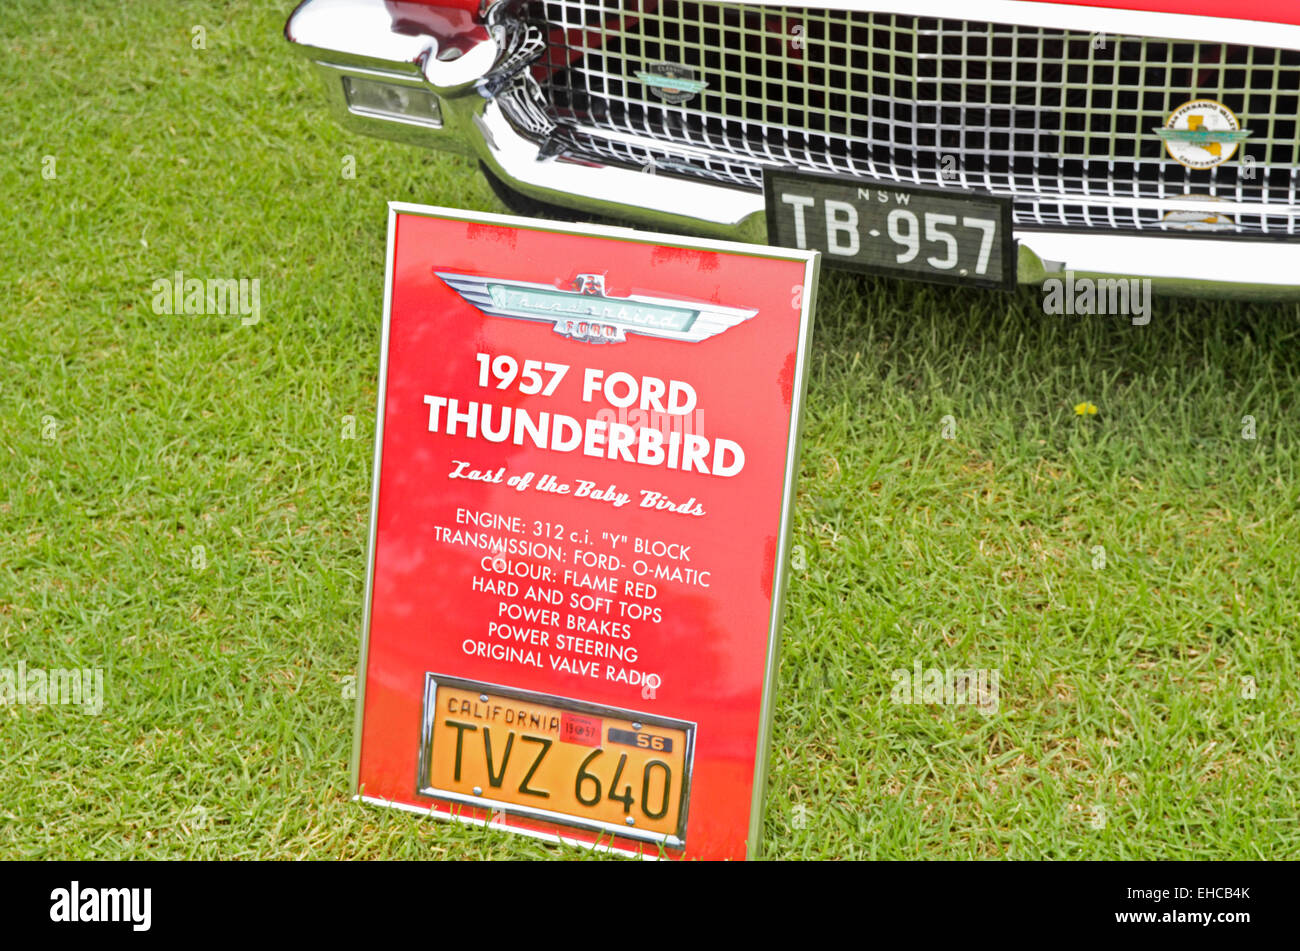 1957 Ford Thunderbird on display at Tamworth Australia Stock Photo